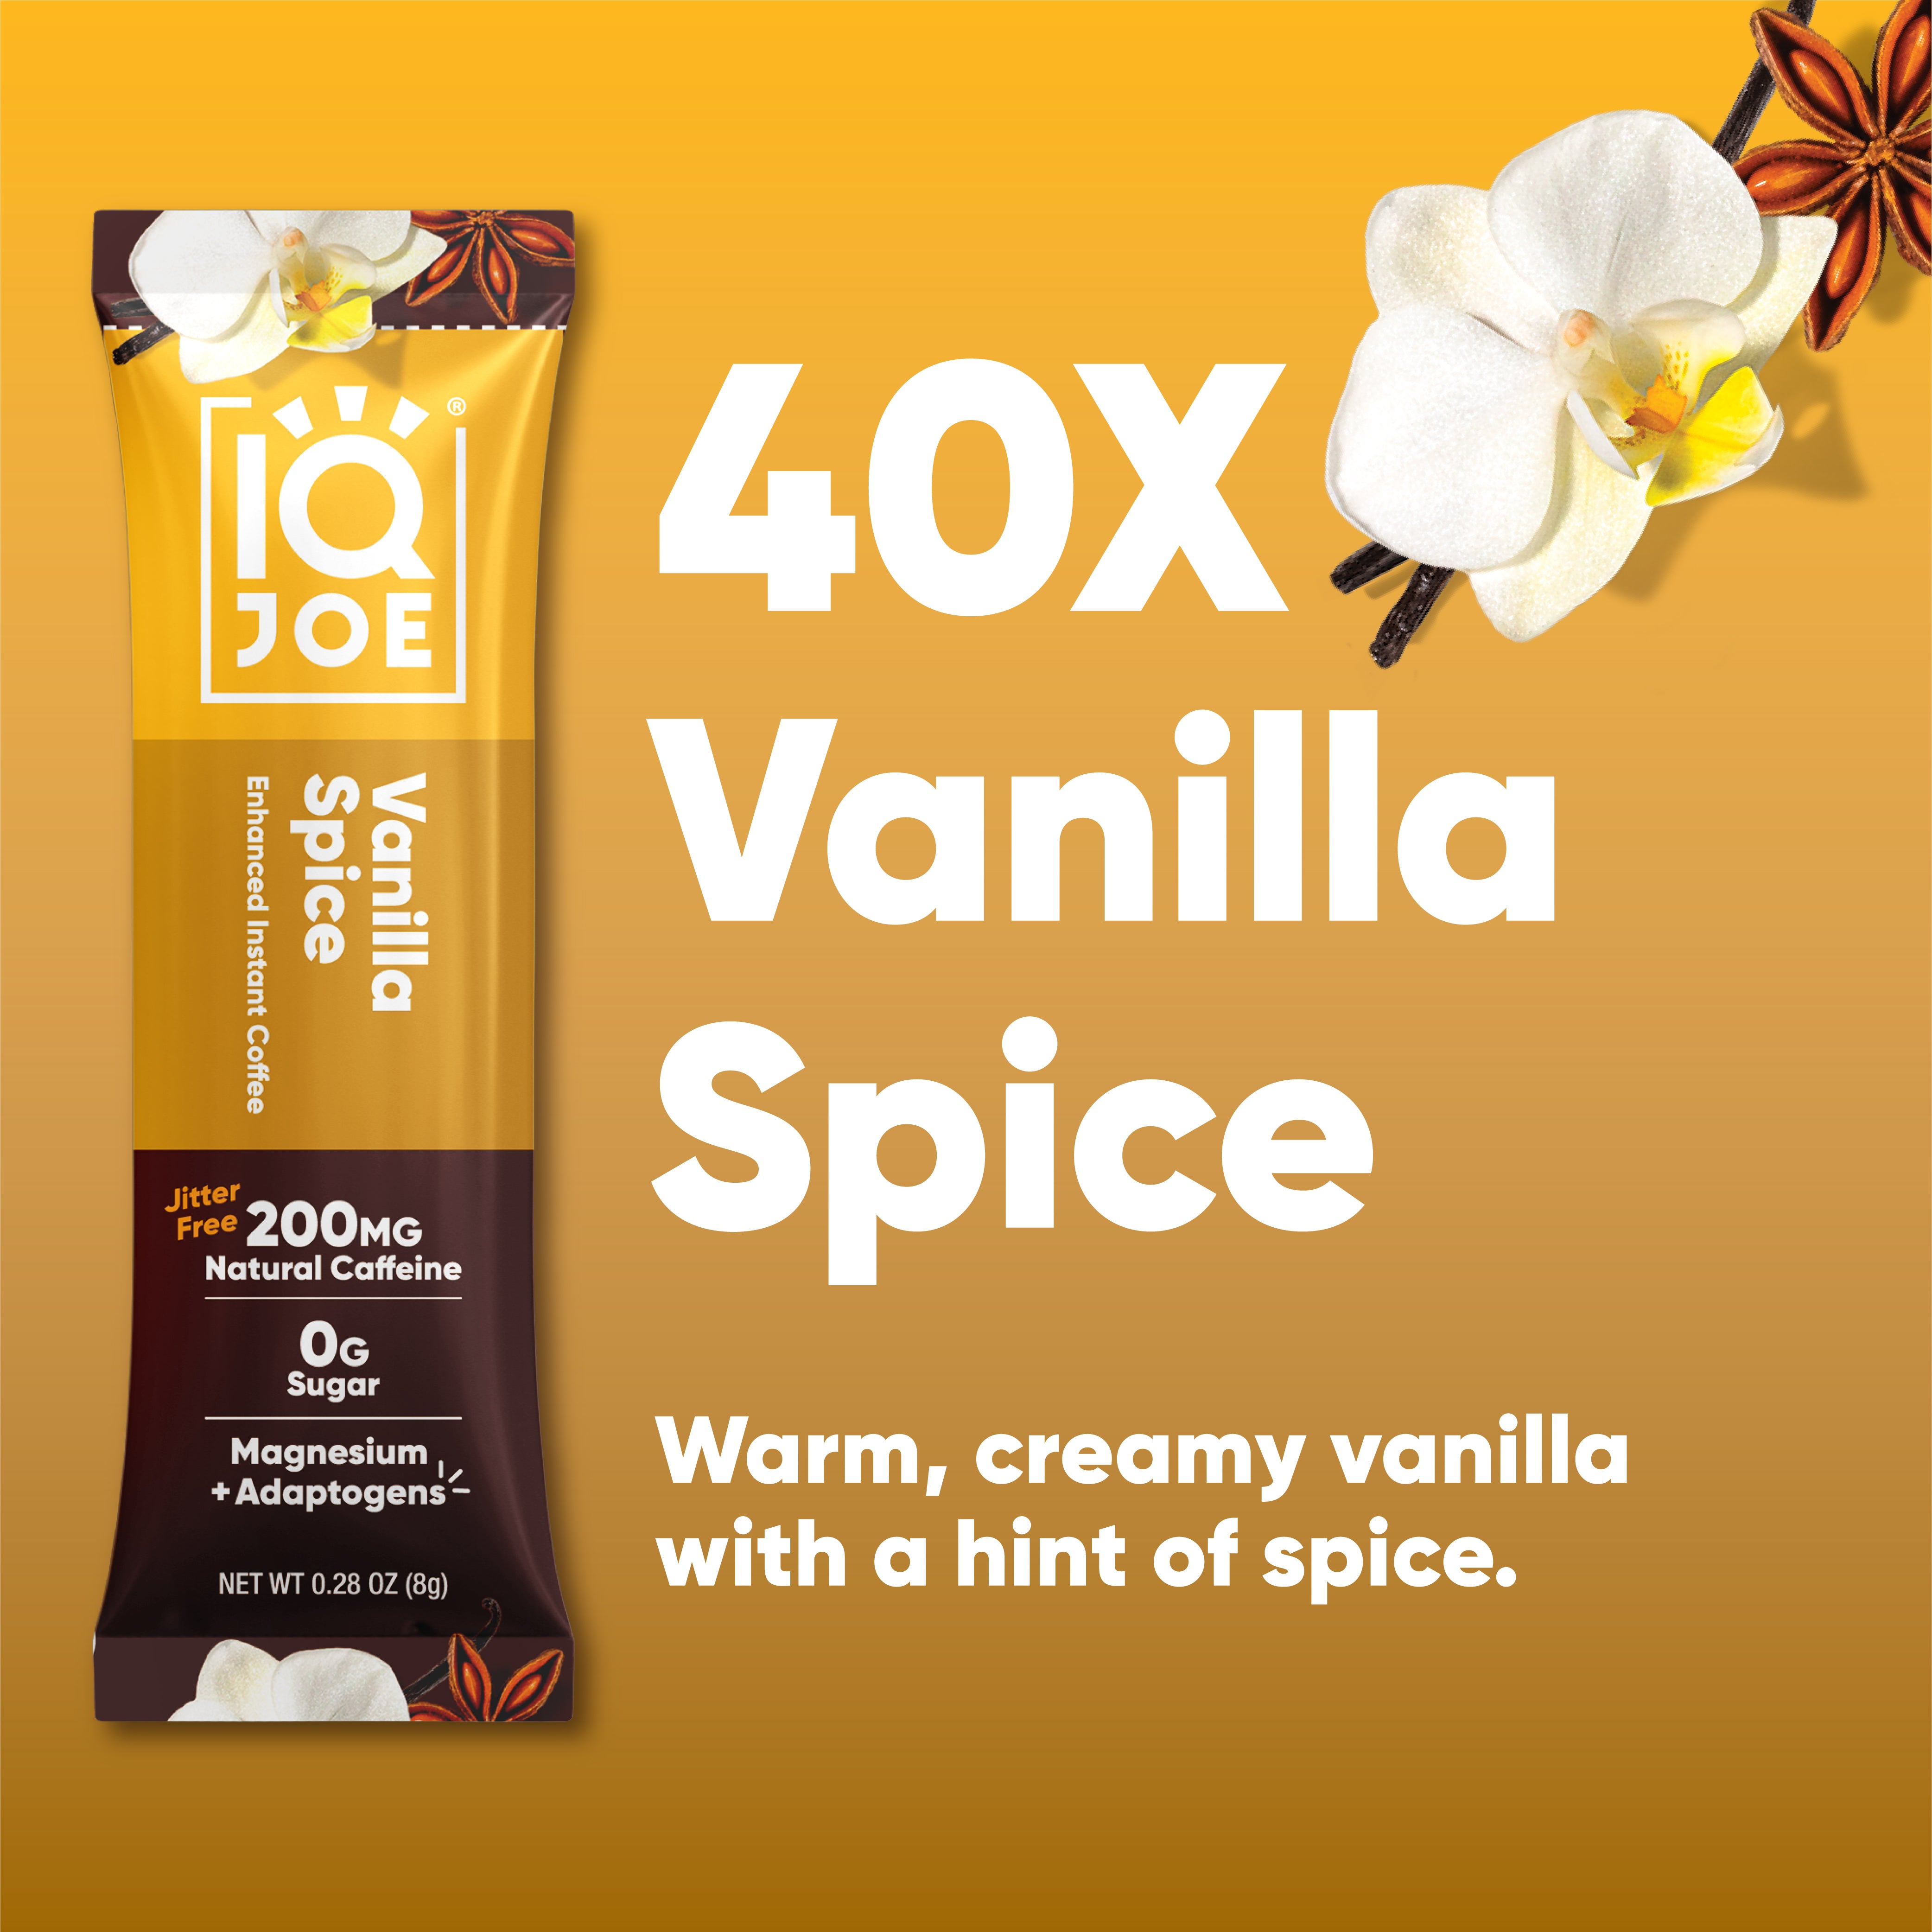 IQJOE Vanilla Spice Mushroom Coffee Packed with Functional Mushrooms, Adaptogens, Natural Coffee, Magnesium.